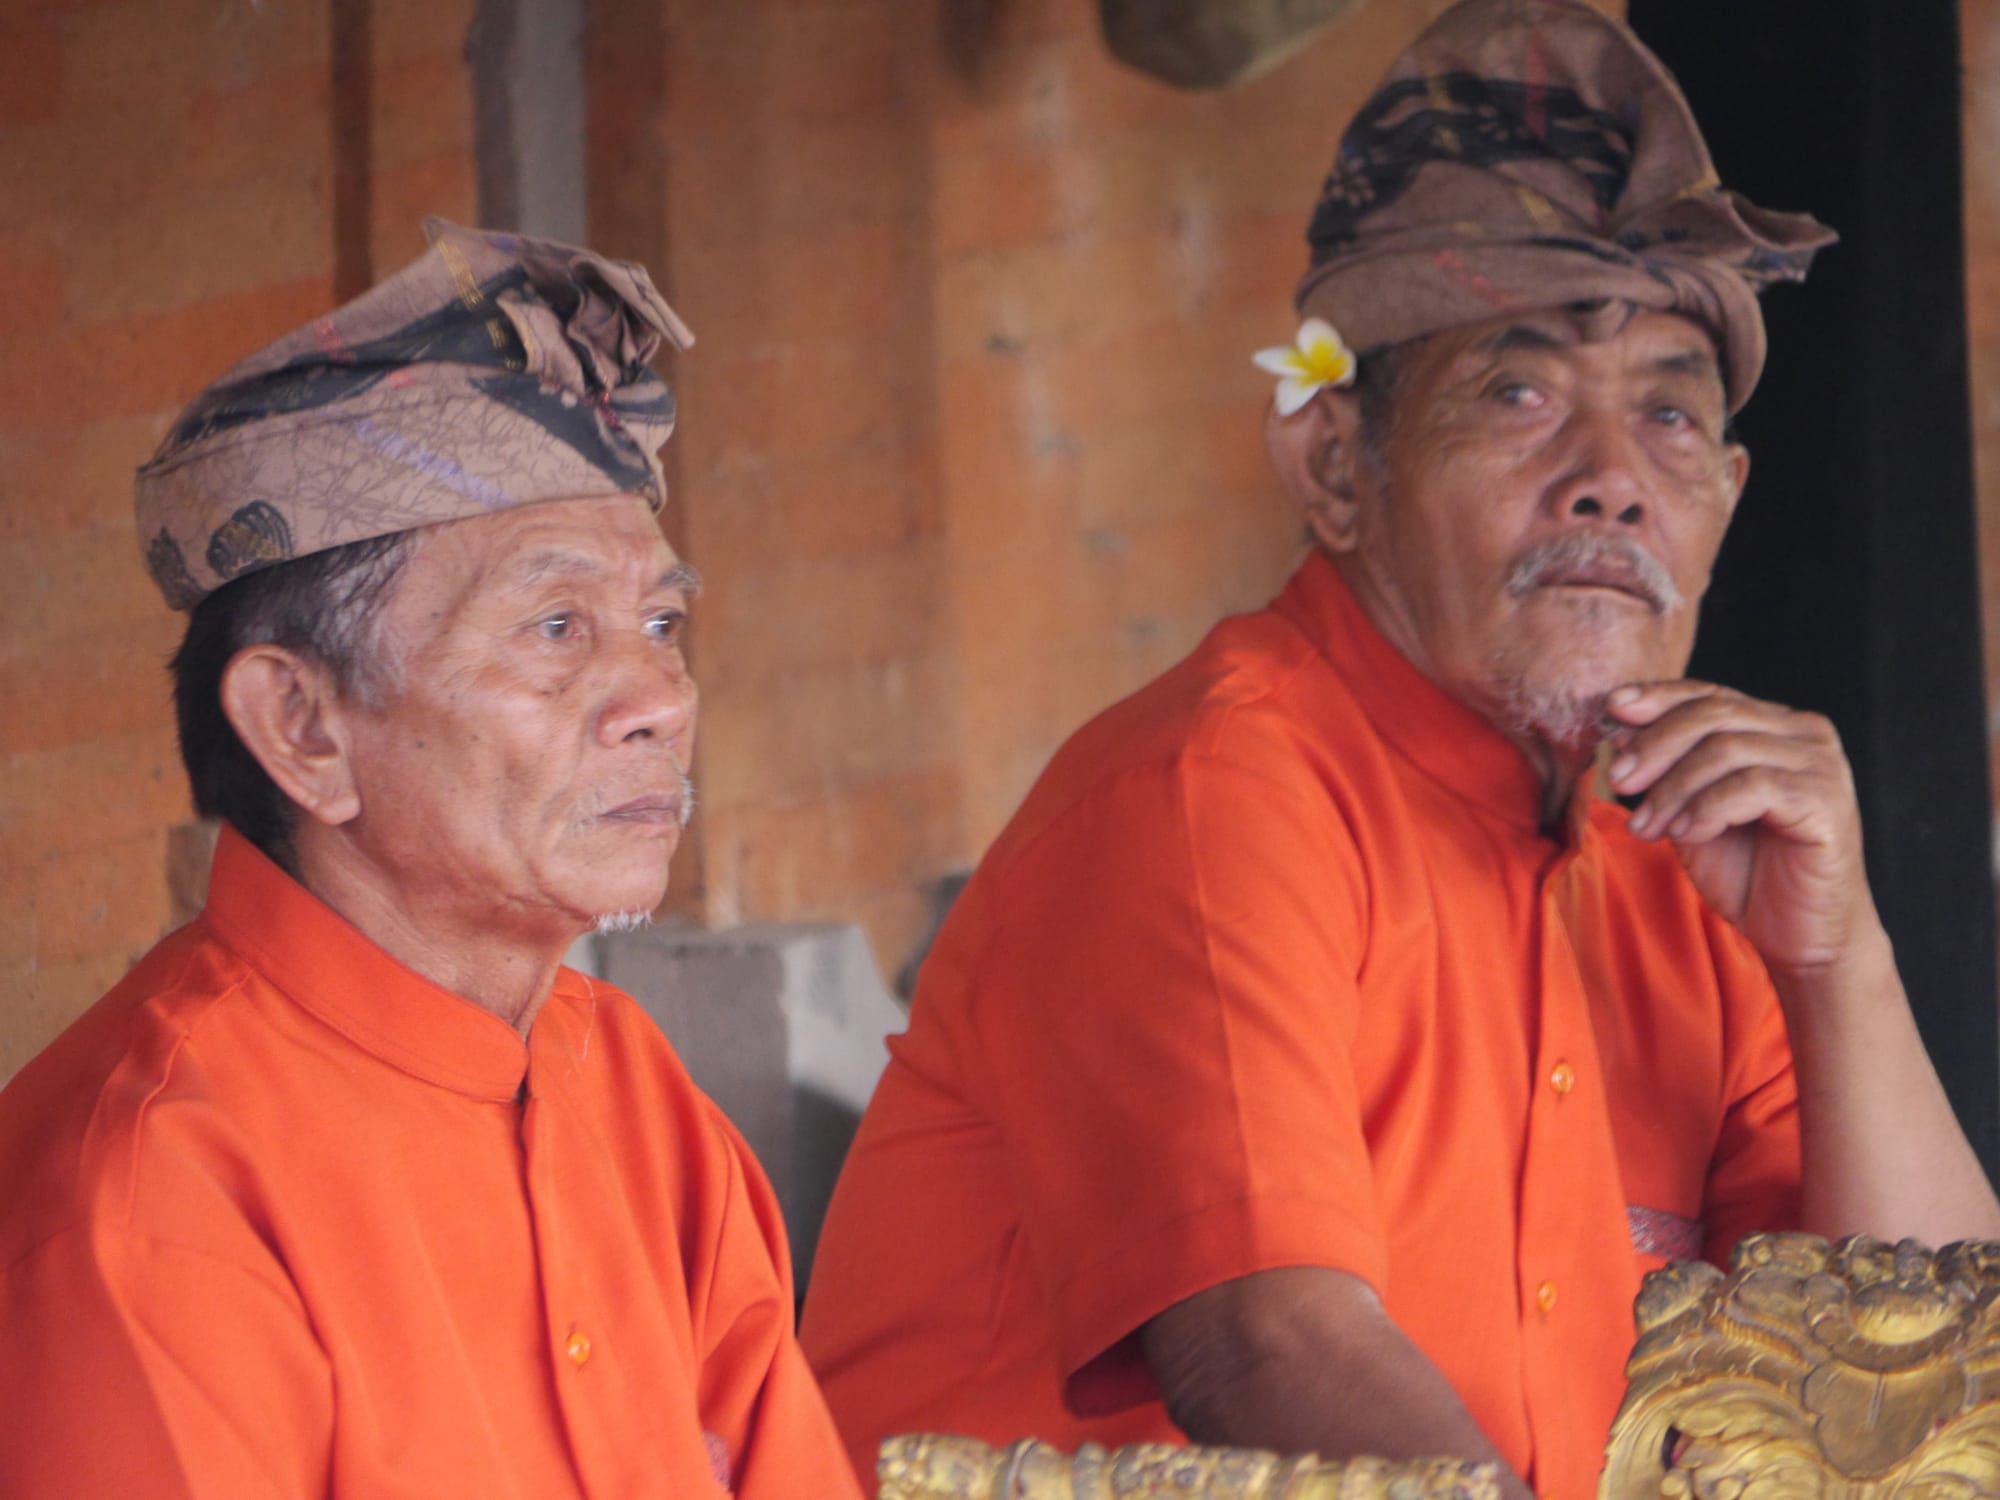 Photo by Author — the musicians — Sahadewa Barong and Kris Dance, Bali, Indonesia